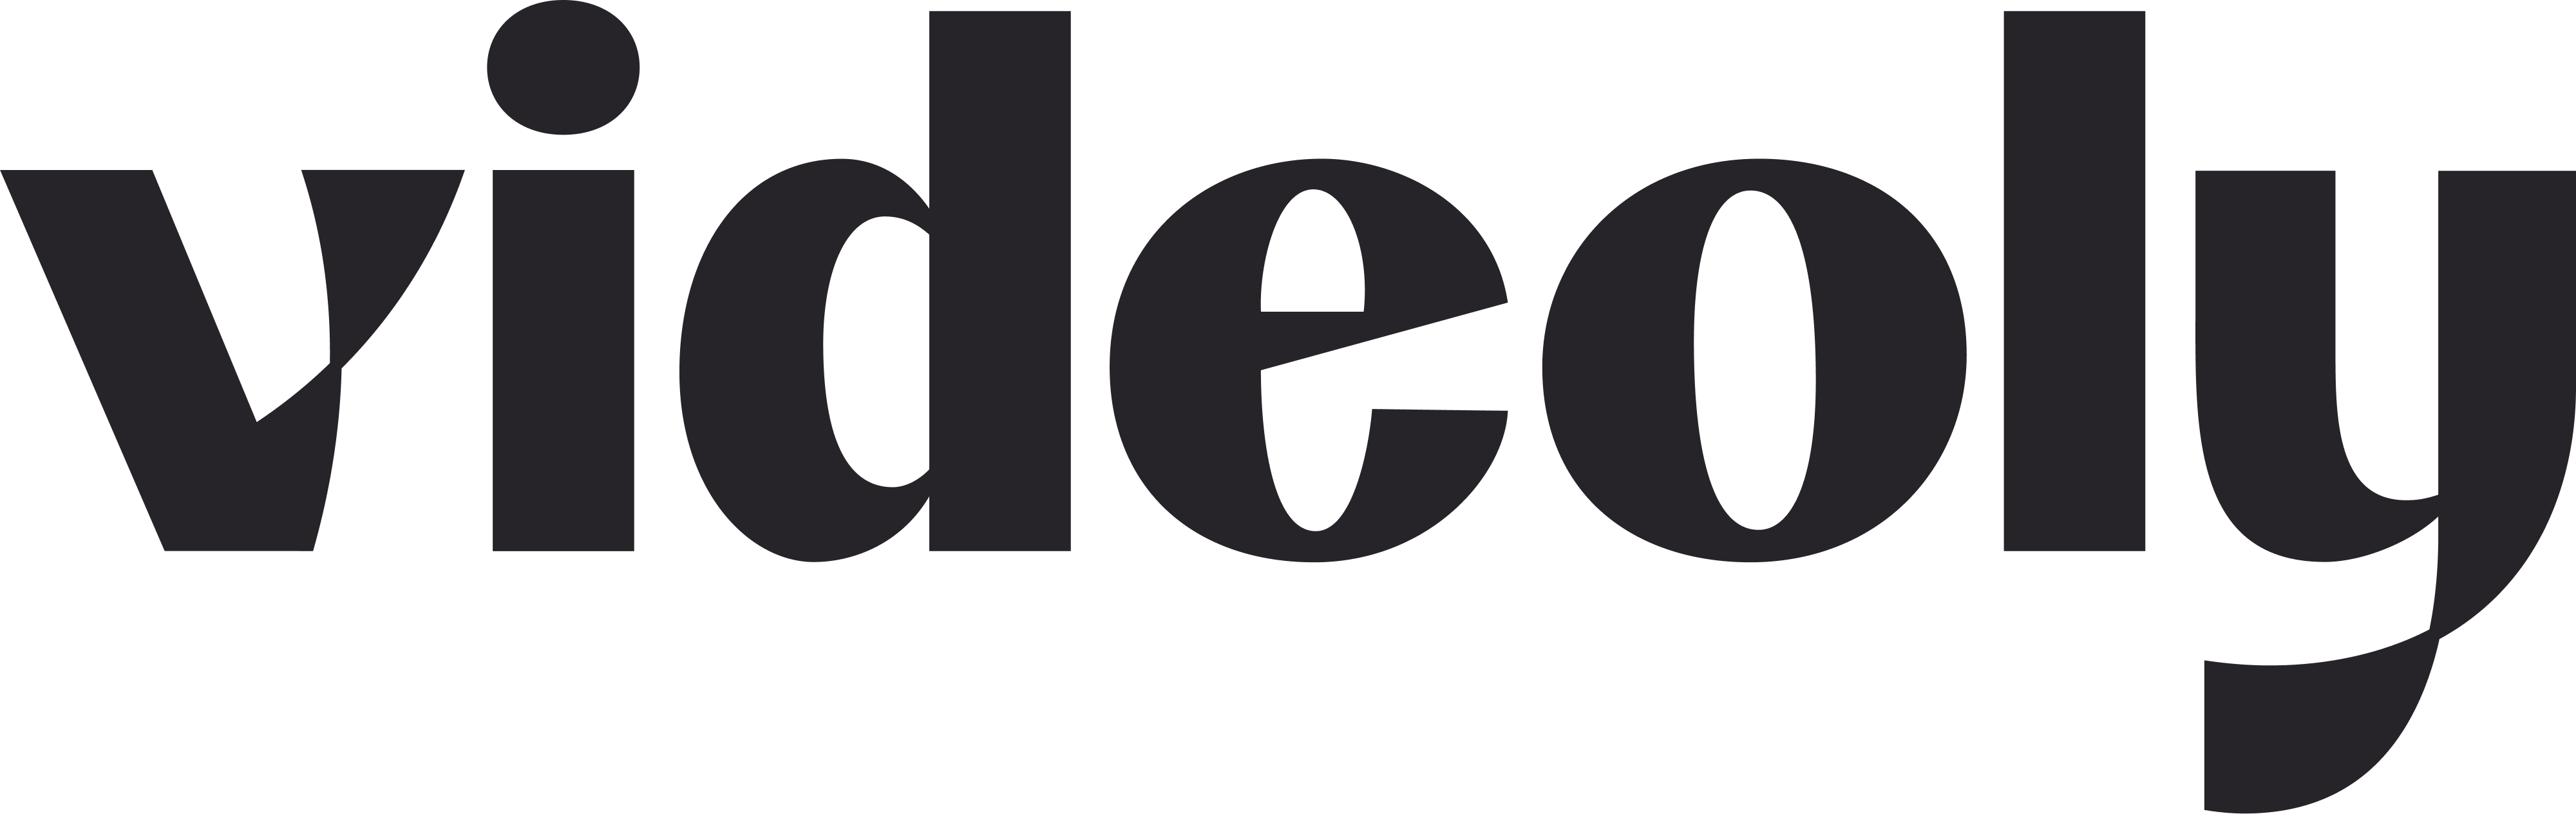 Videoly logo black